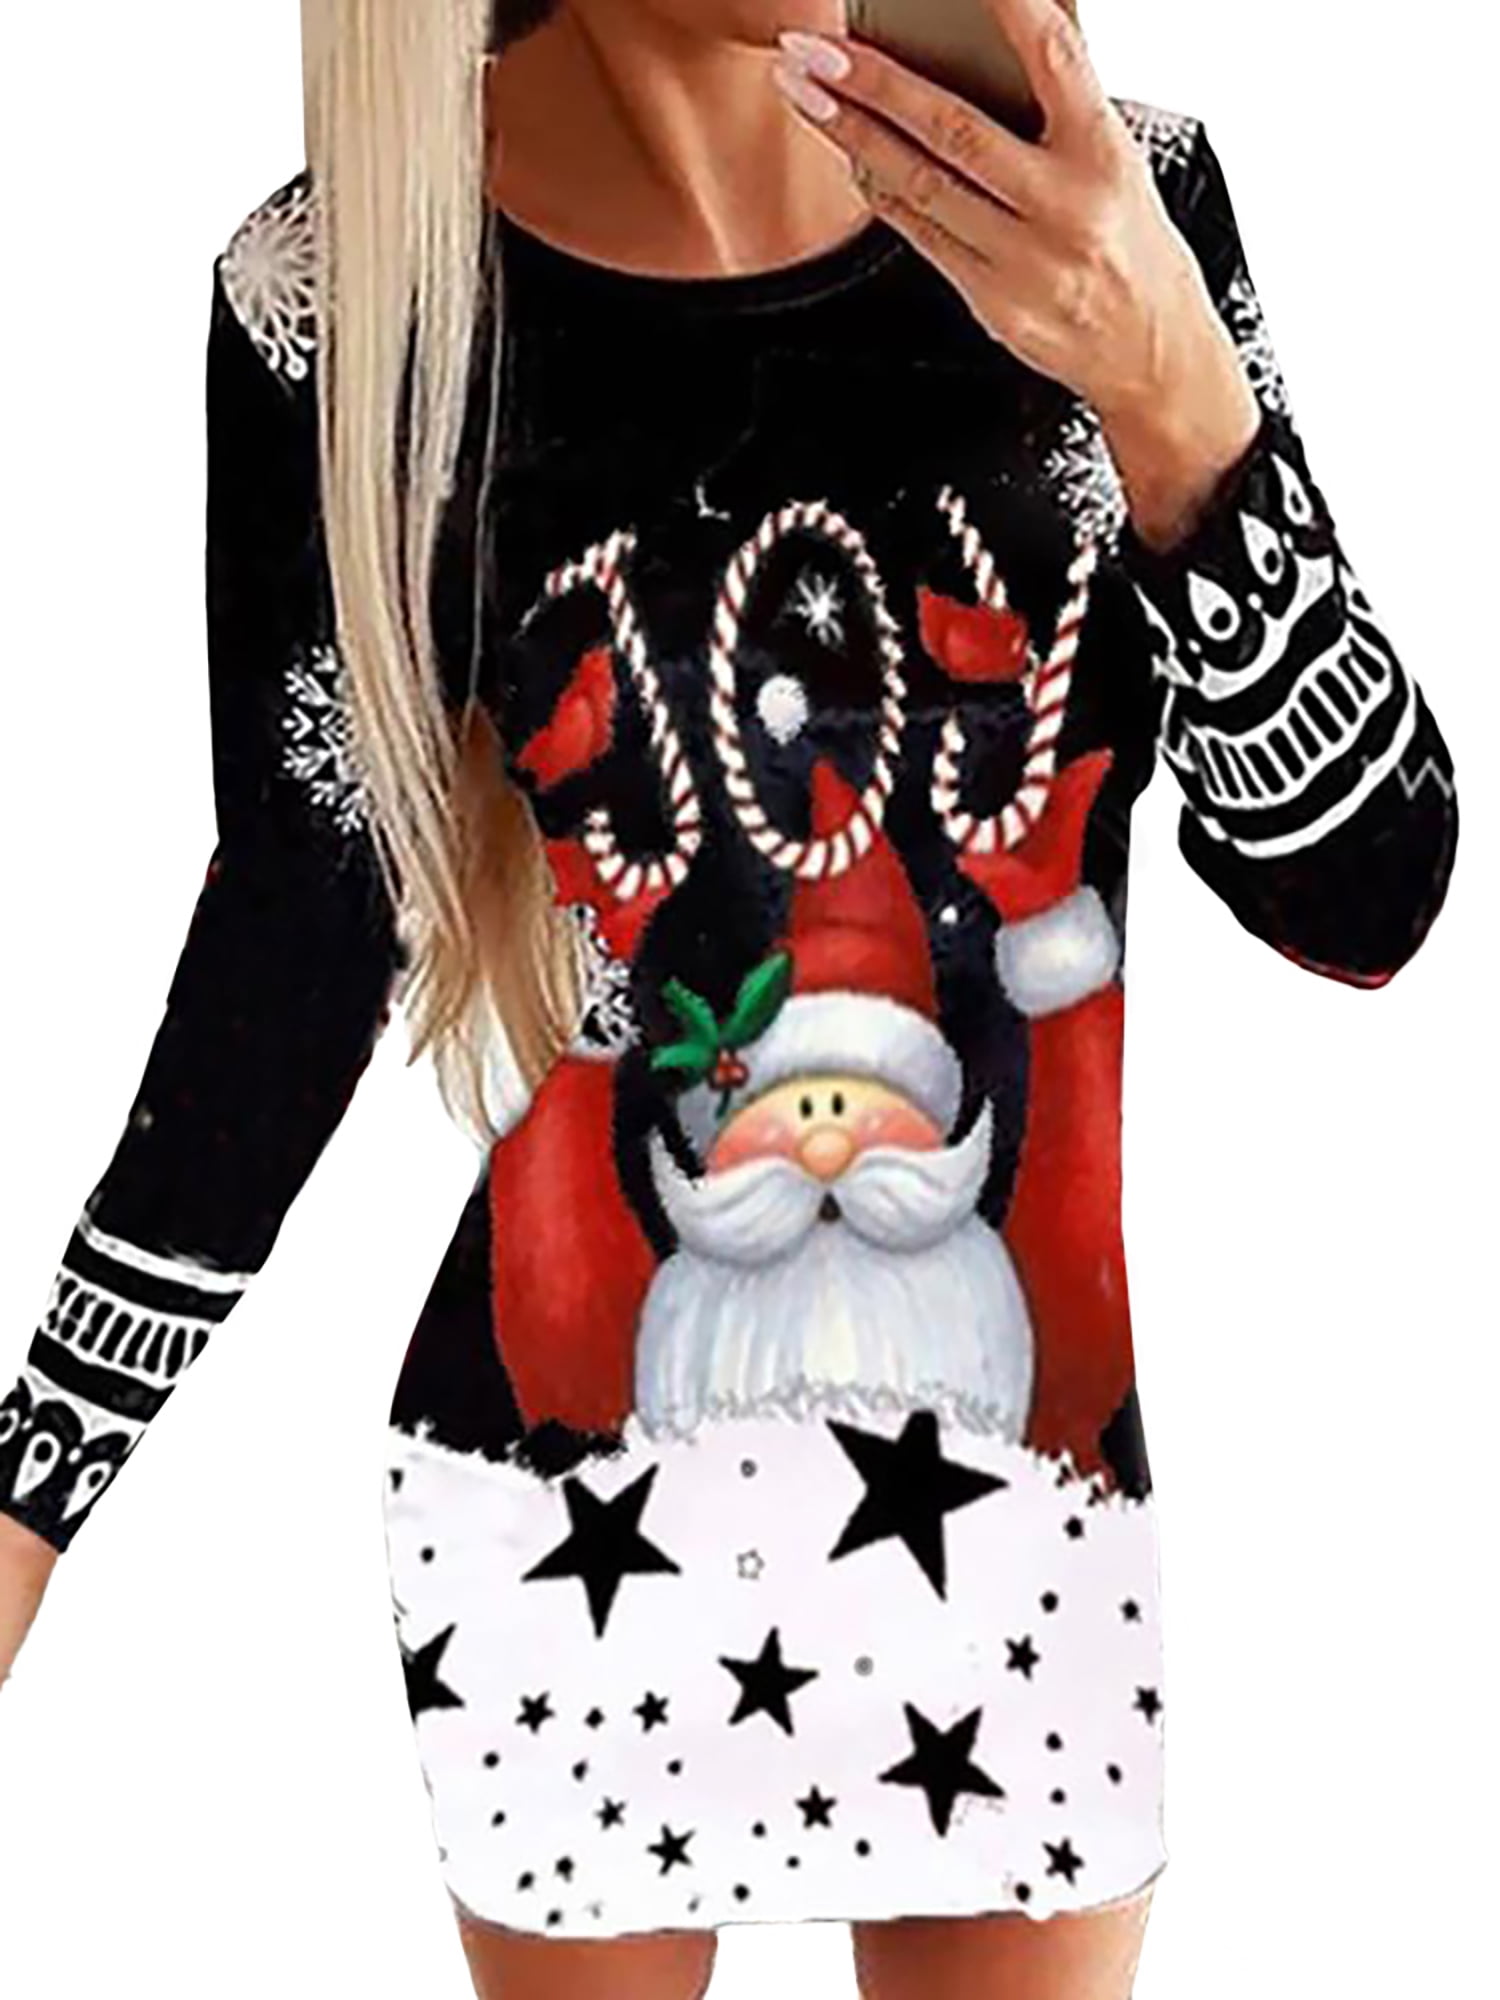 sheart 9 Womens Christmas Santa Claus Print Dresses Long Sleeve Crew Neck Flared Xmas Holiday A Line Dress 